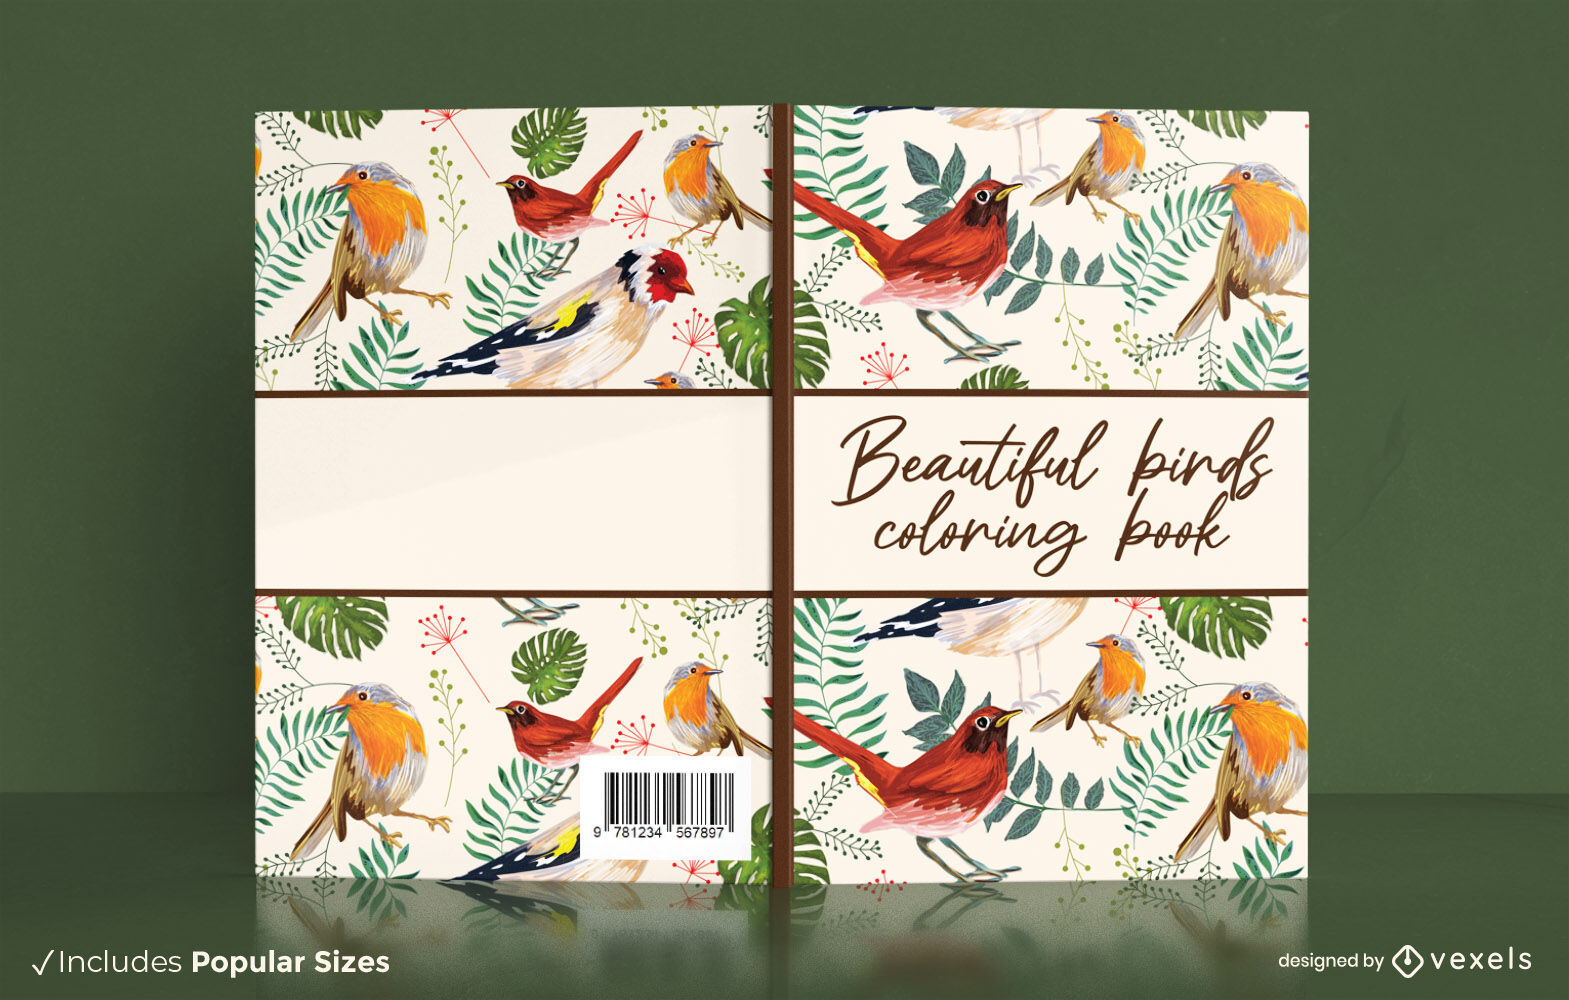 Realistic birds book cover design KDP